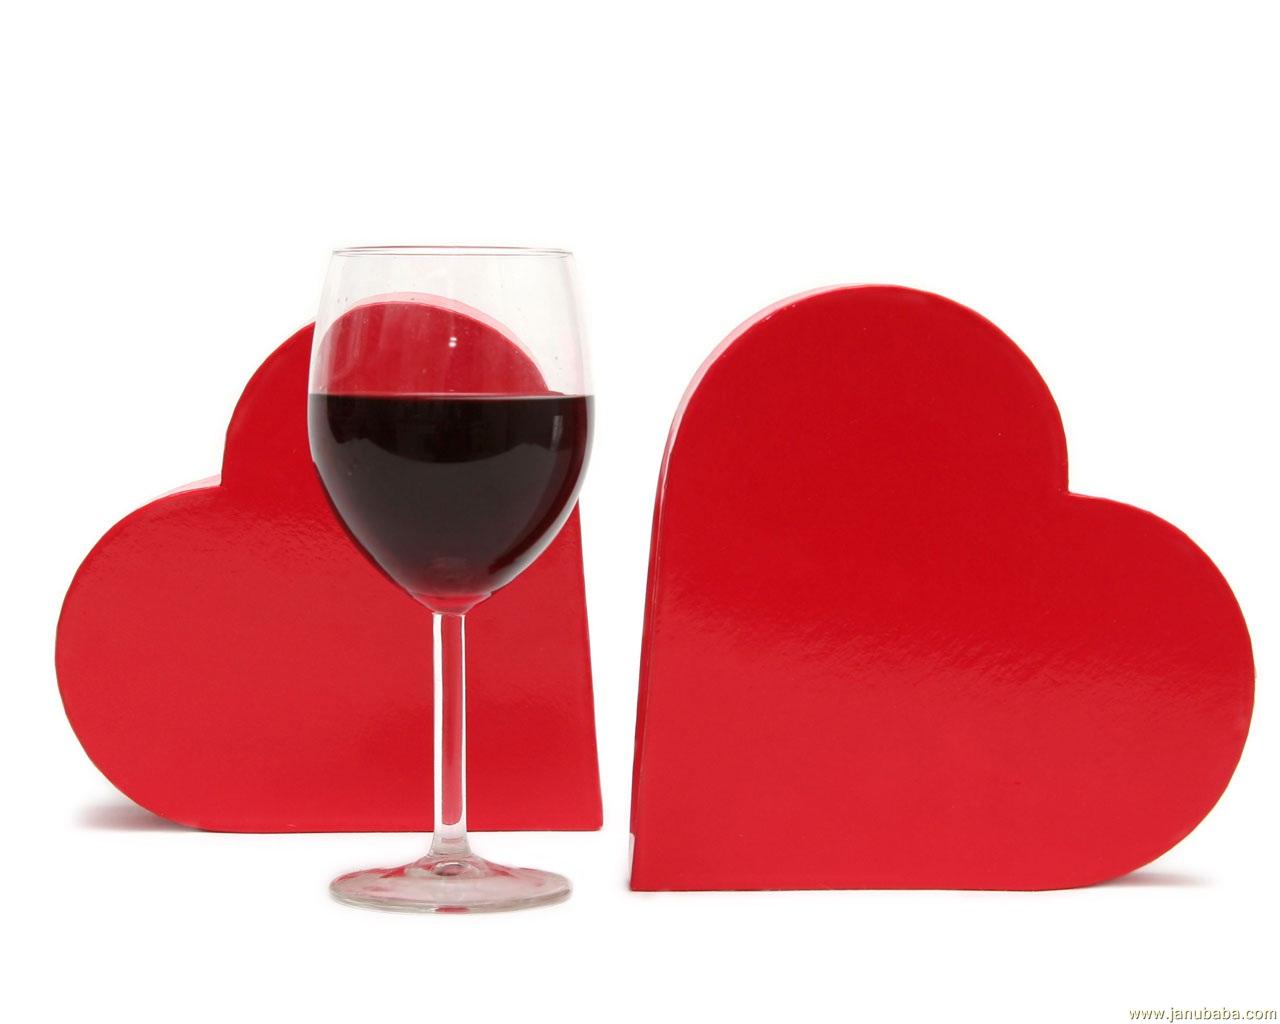 Love And Wine